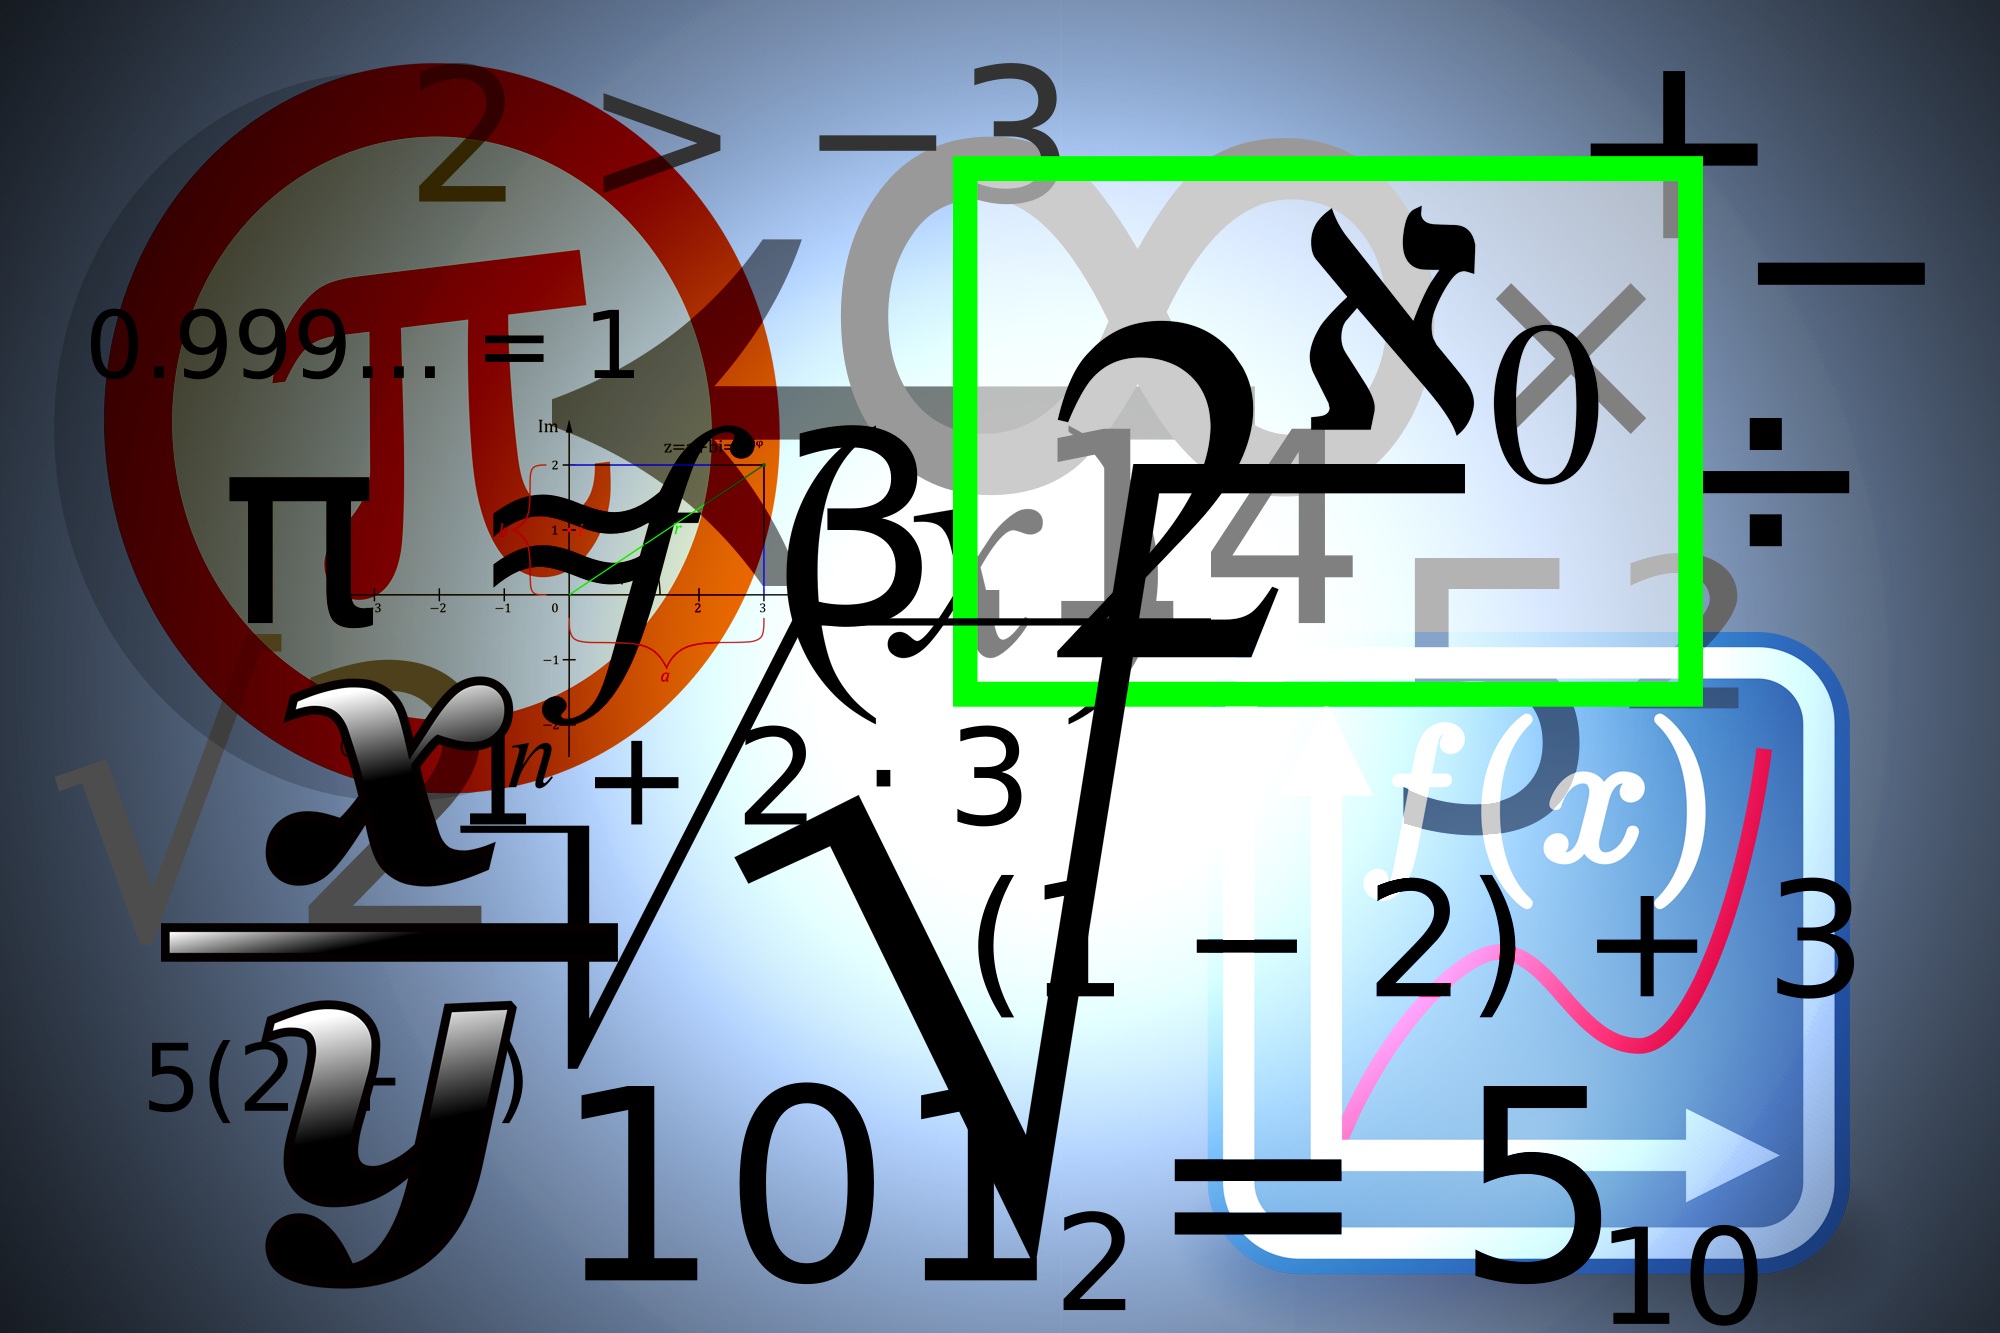 Mathematic formulas and equations free image